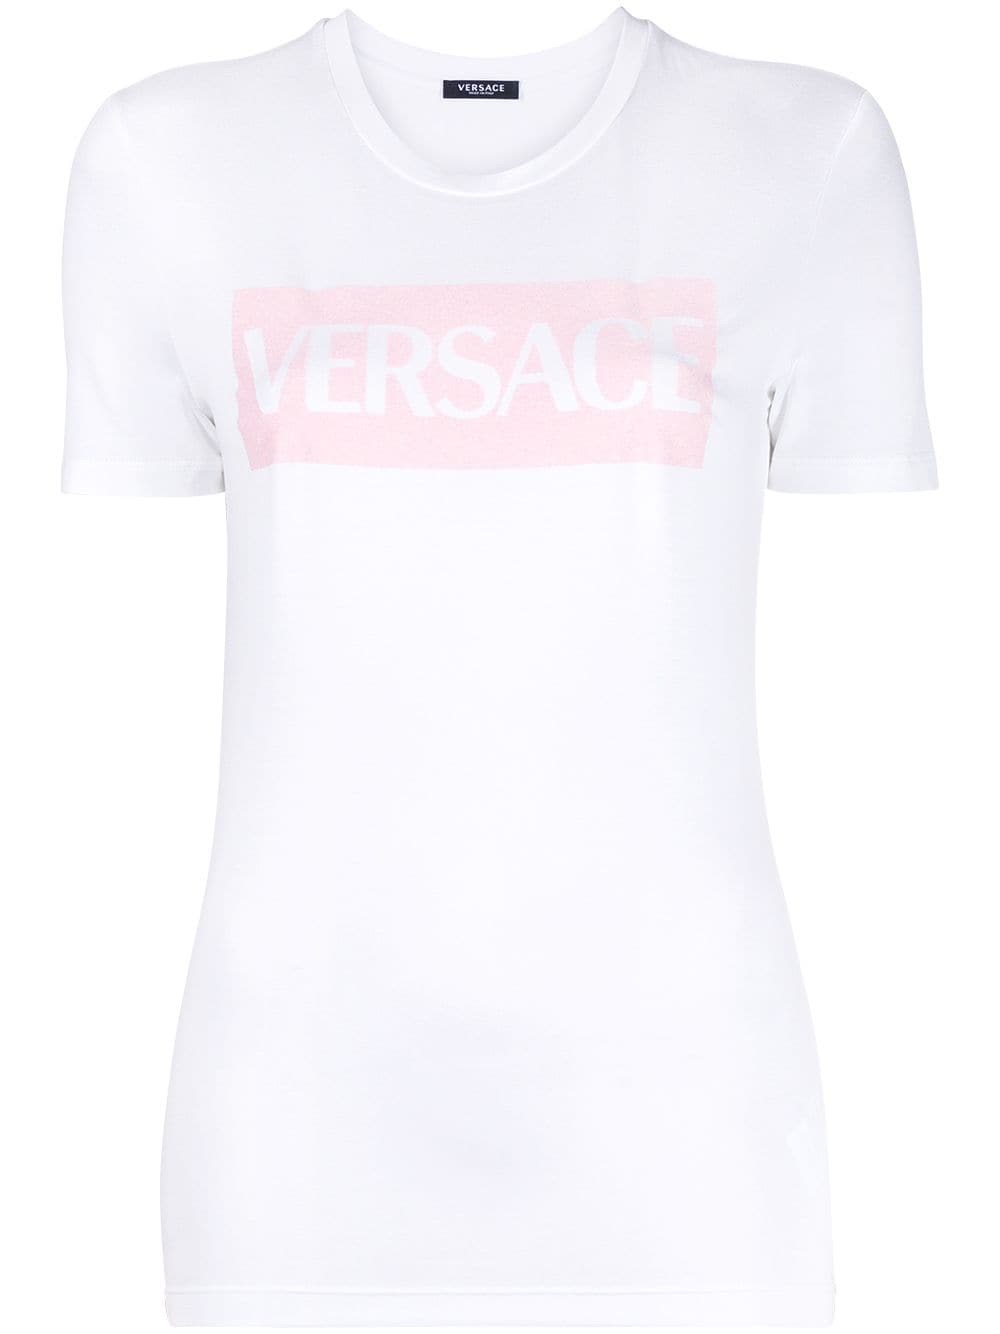 versace t shirt grey